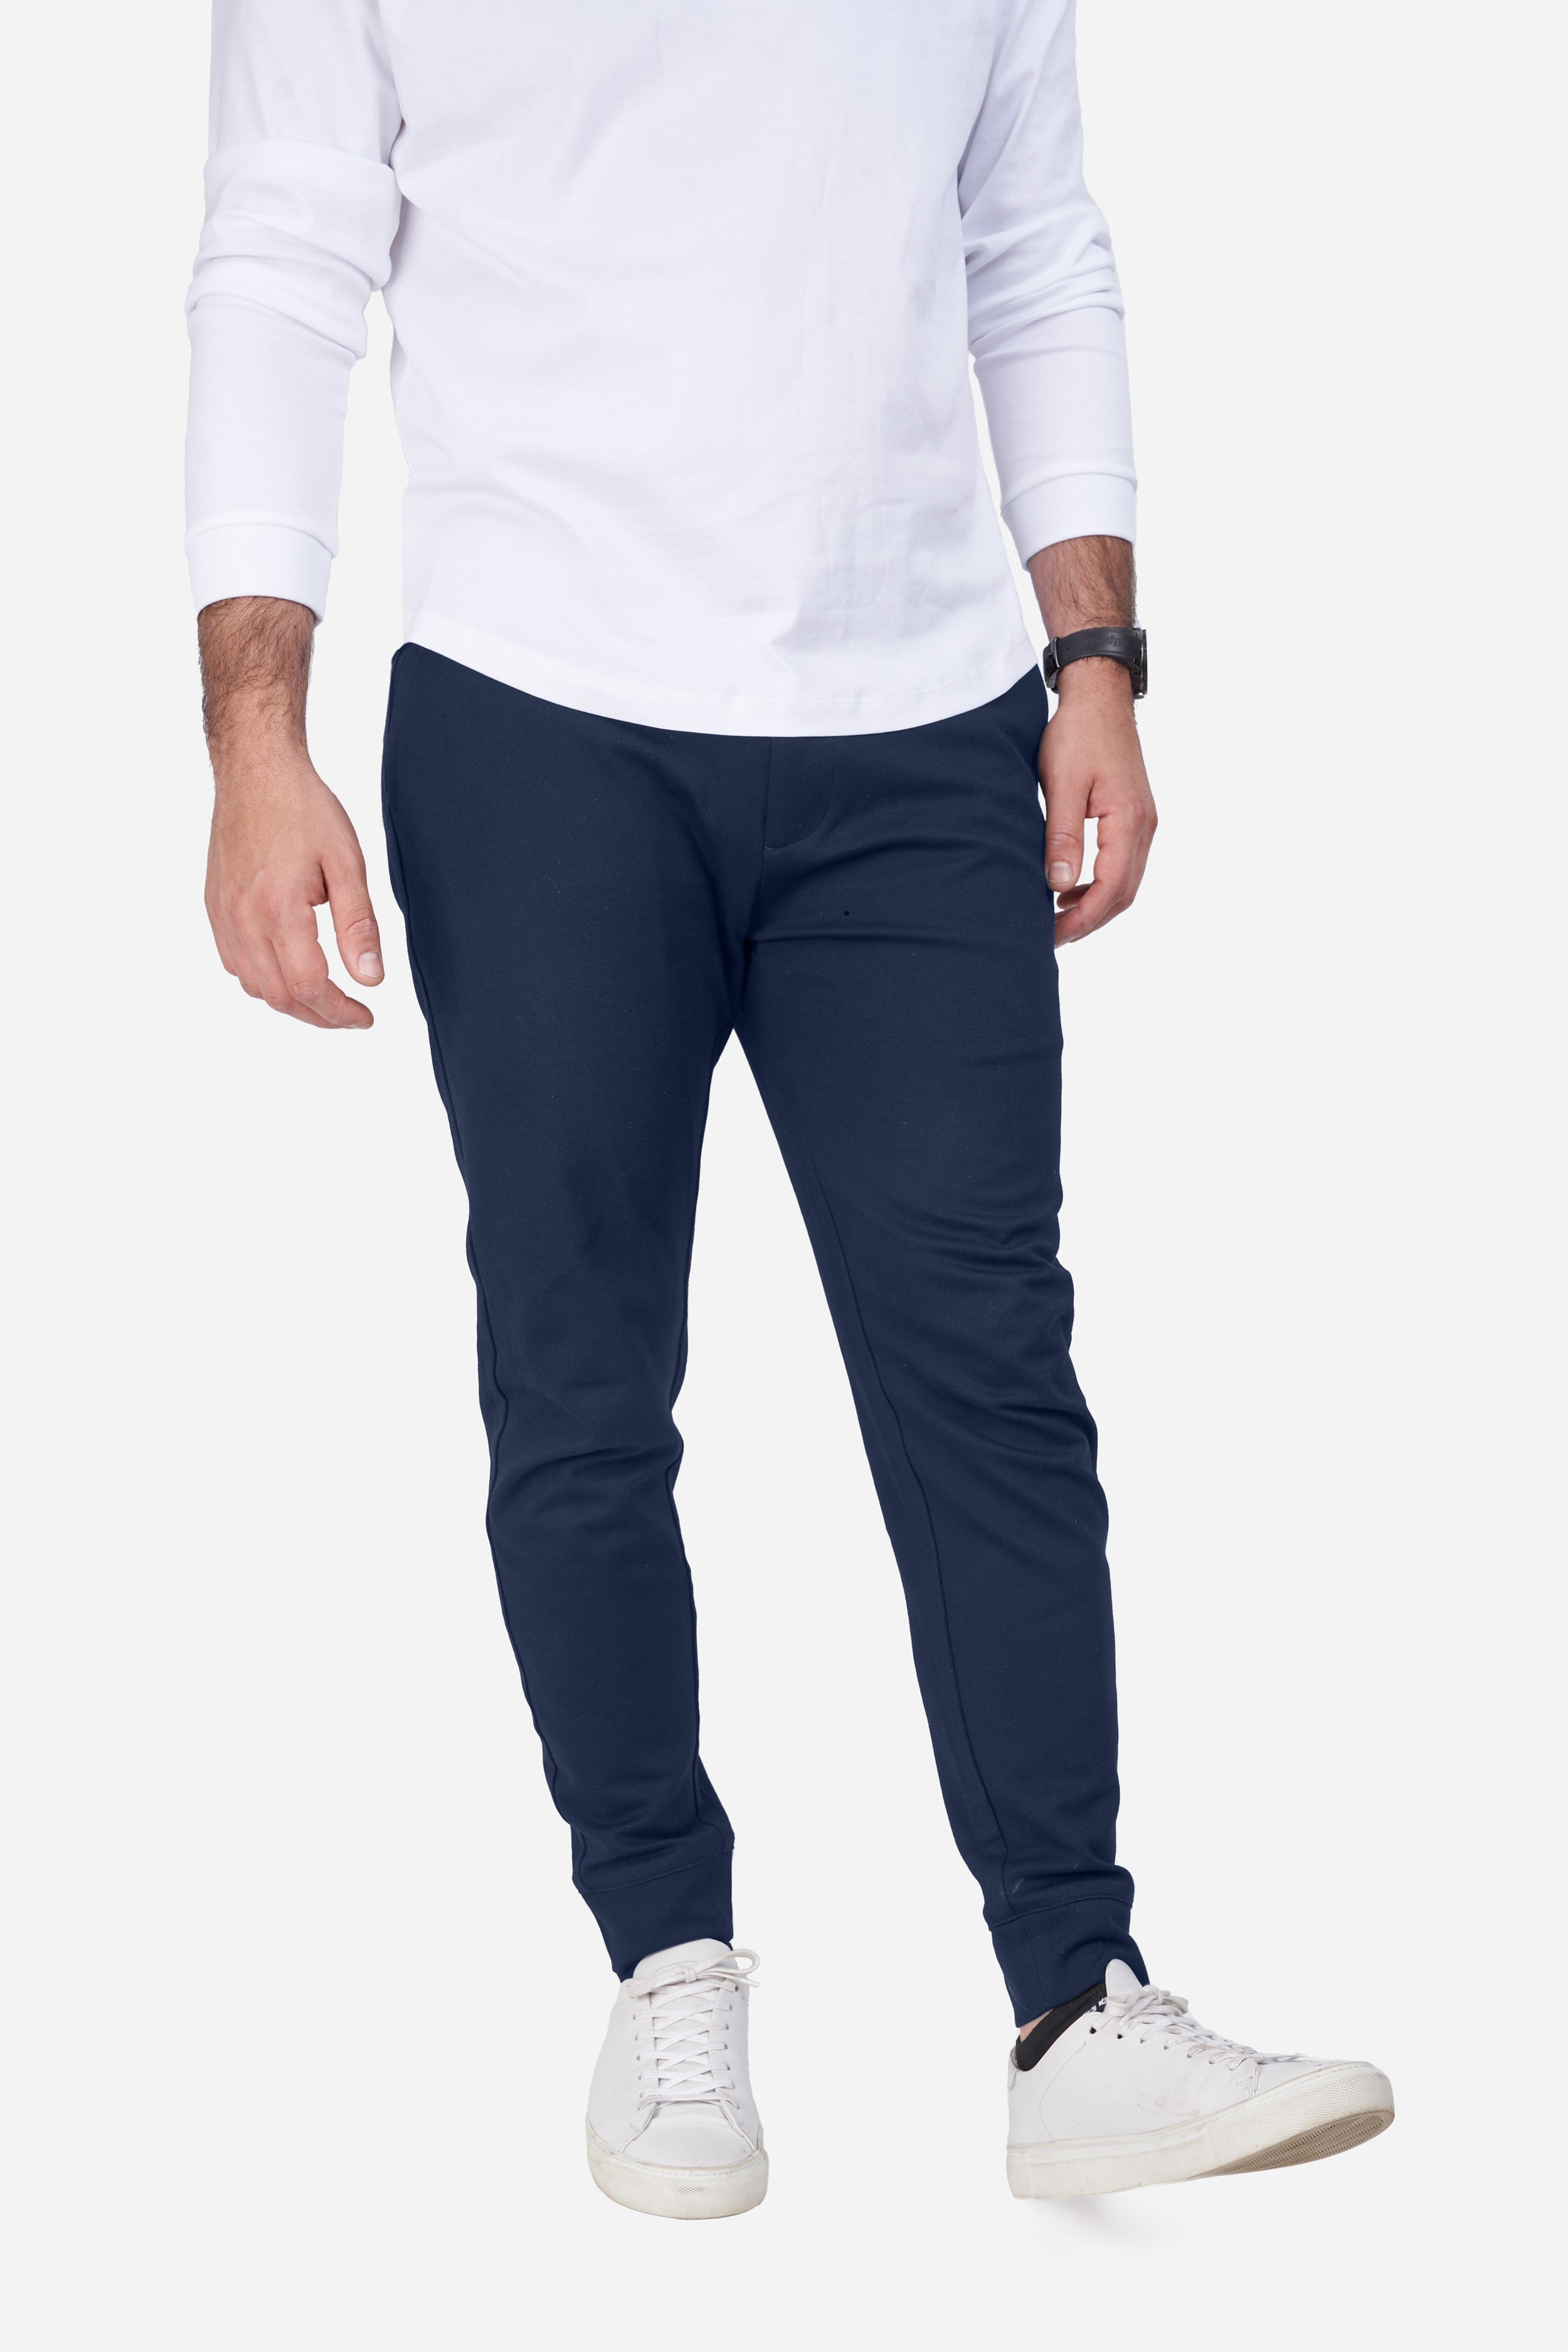 IDEALSANXUN Men's Elastic Waist Jeans/Twill Casual Pants, Dark Blue, 32W x  28L : : Clothing, Shoes & Accessories